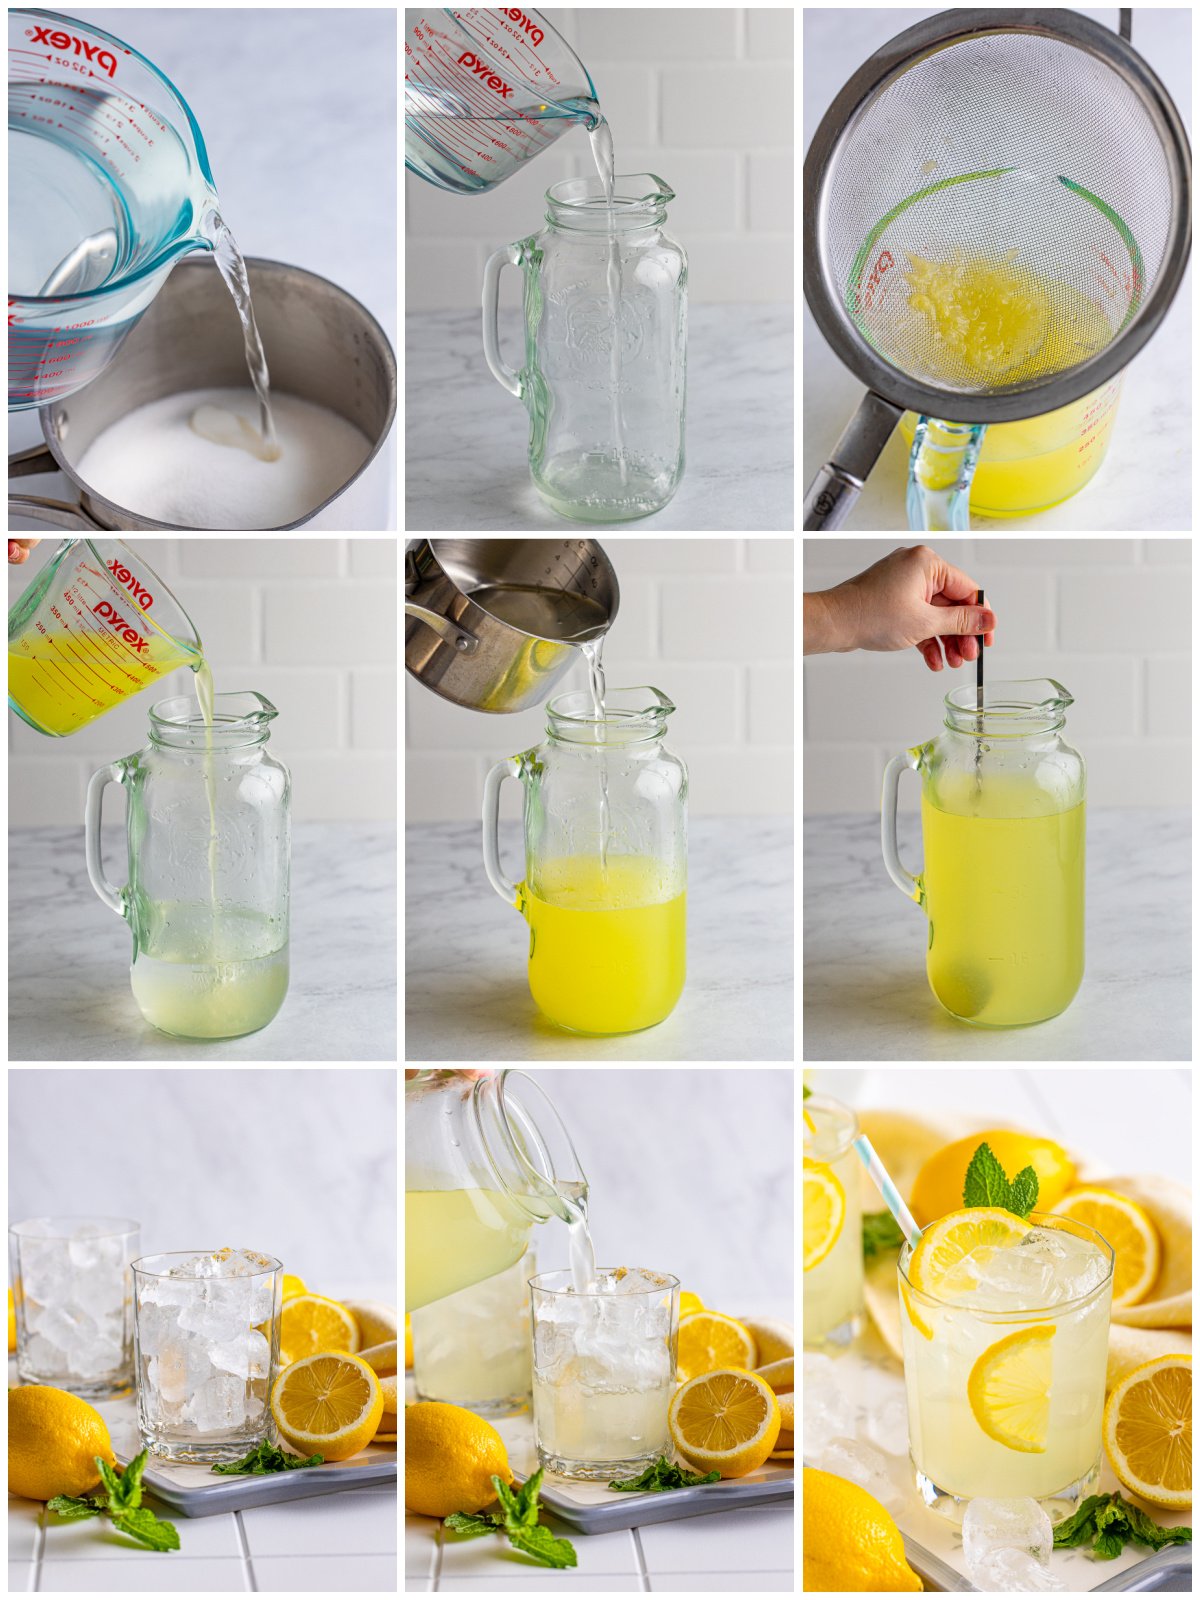 Step by step photos on how to make a Lemonade Recipe.